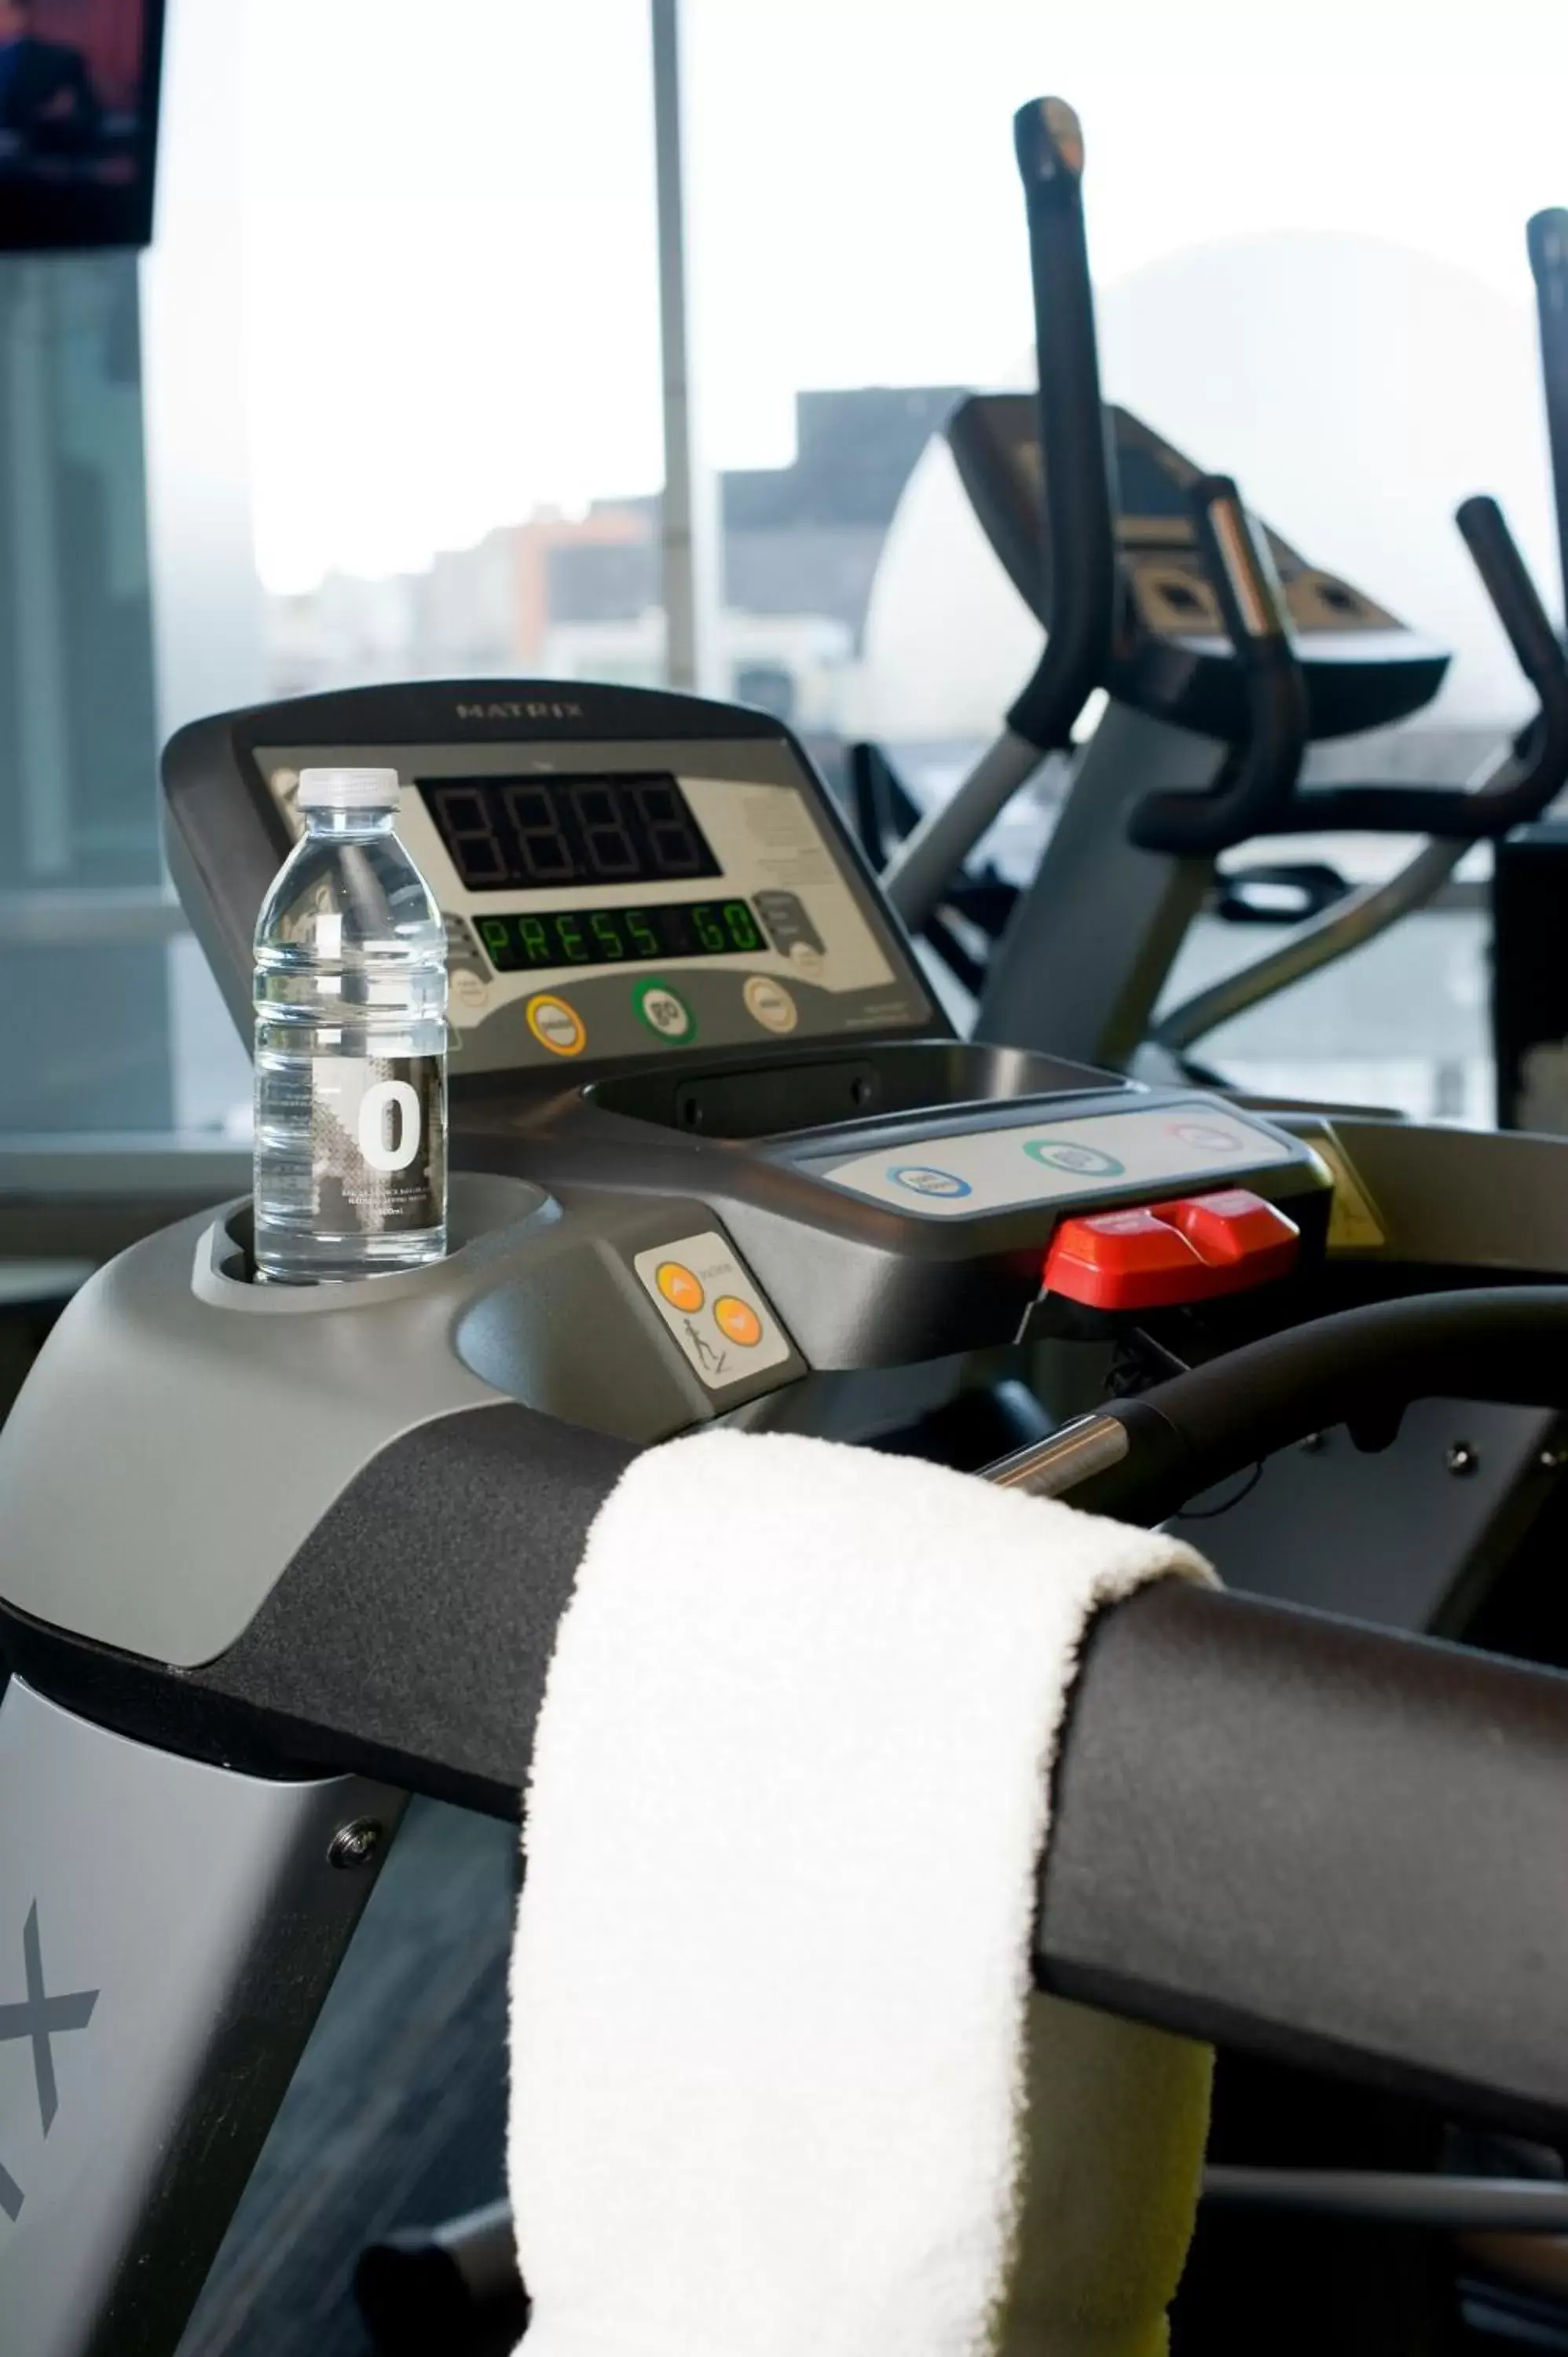 Fitness centre/facilities, Fitness Center/Facilities in Hotel Zero 1 Montreal